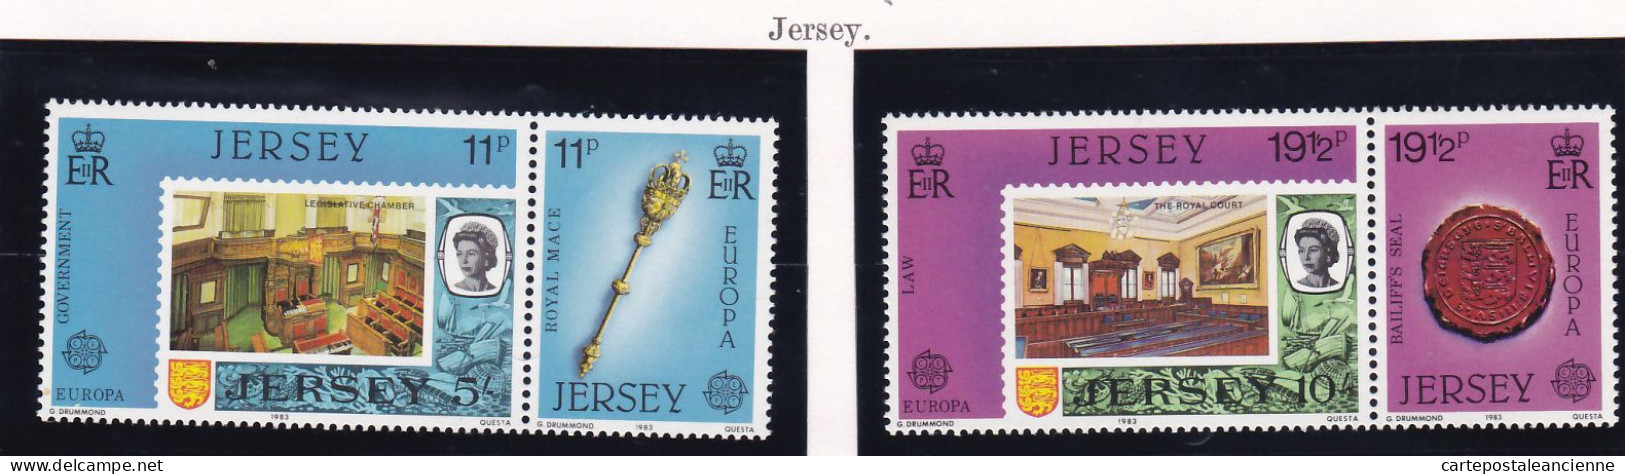 28254 / CEPT EUROPA 1983 JERSEY Yvert-Tellier N° 293 à 296 Michel N° 299 à 302  ** MNH C.E.P.T - 1983